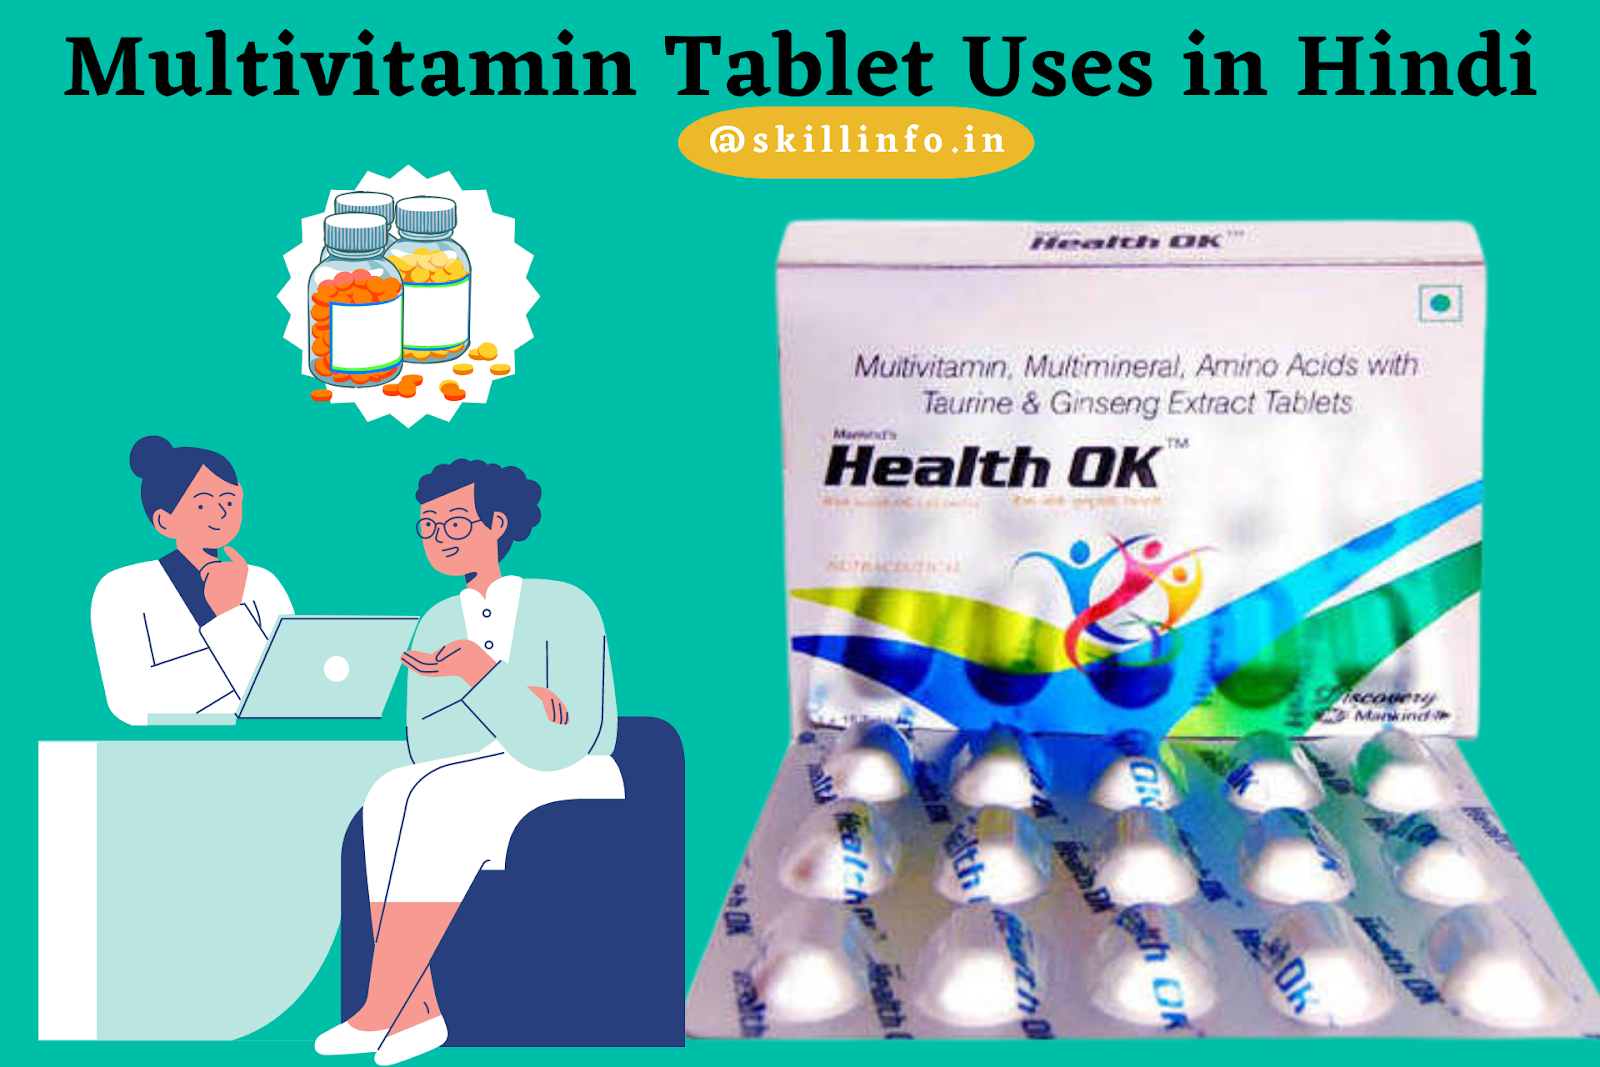 Multivitamin tablet uses in hindi